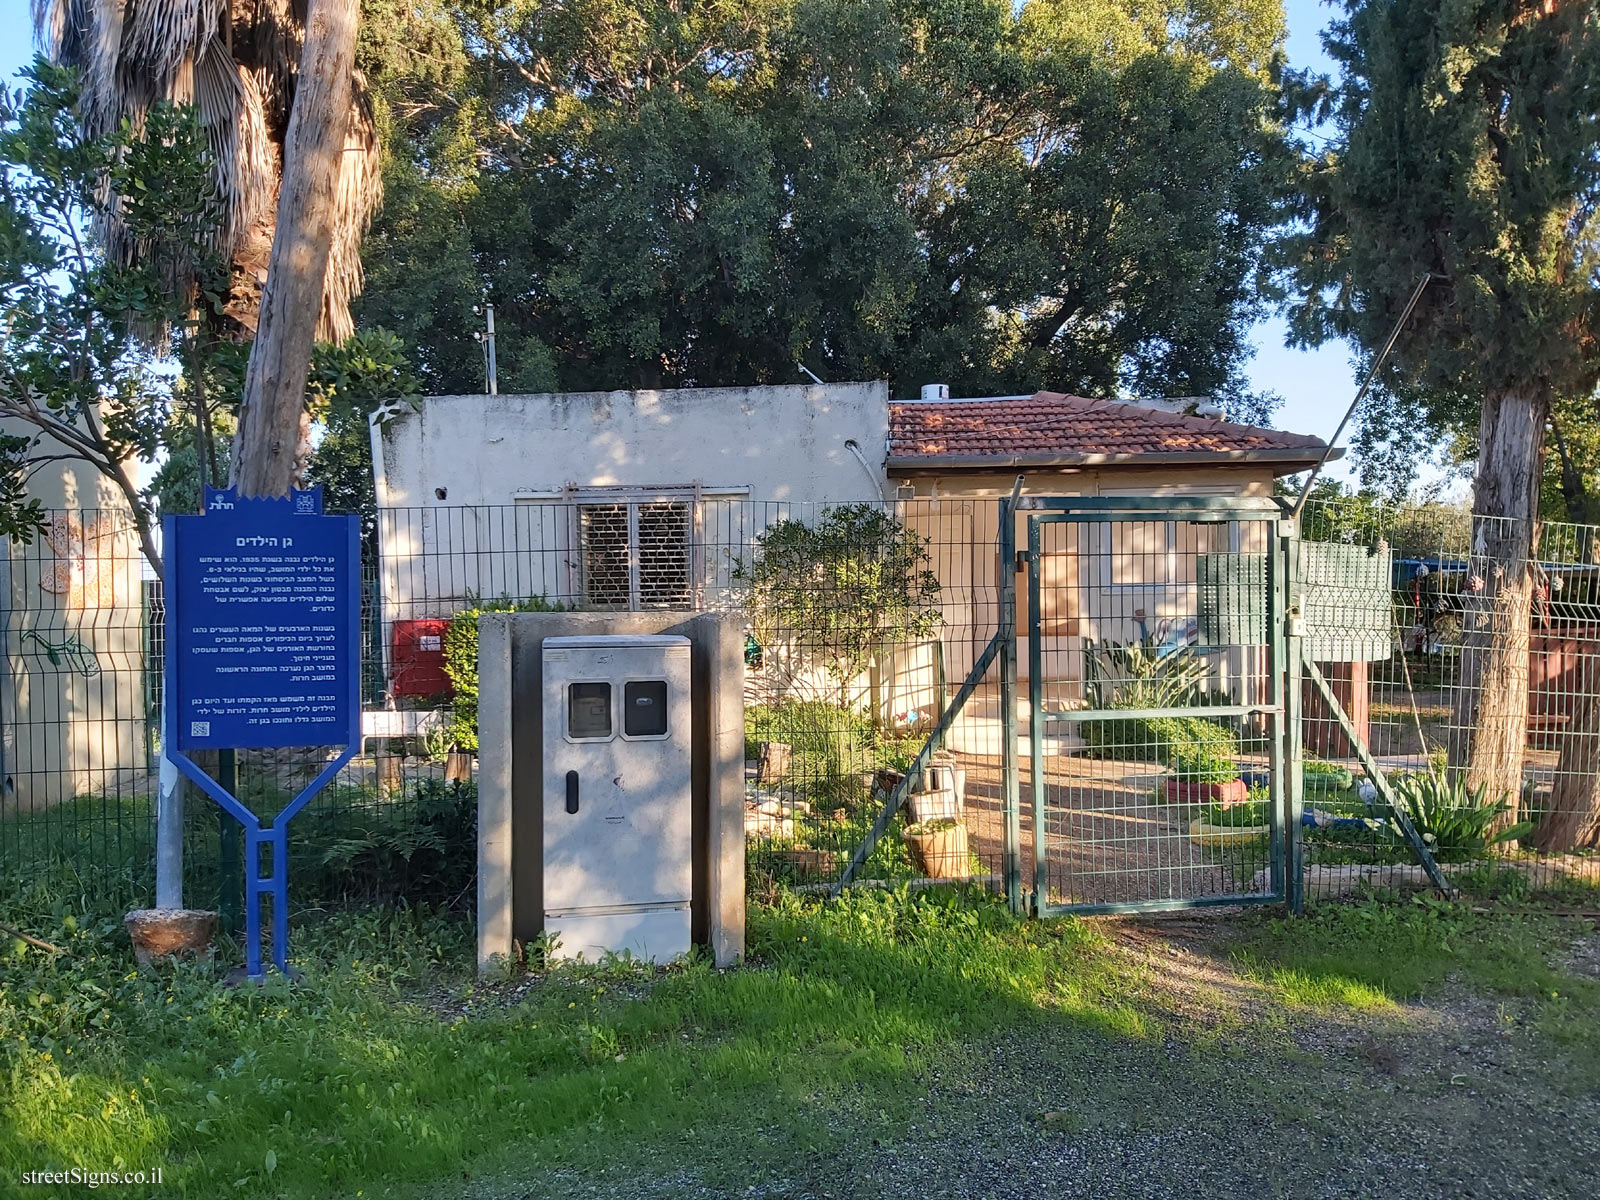 Herut - Heritage Sites in Israel - The Kinder garden - HaHanafa, Herut, Israel